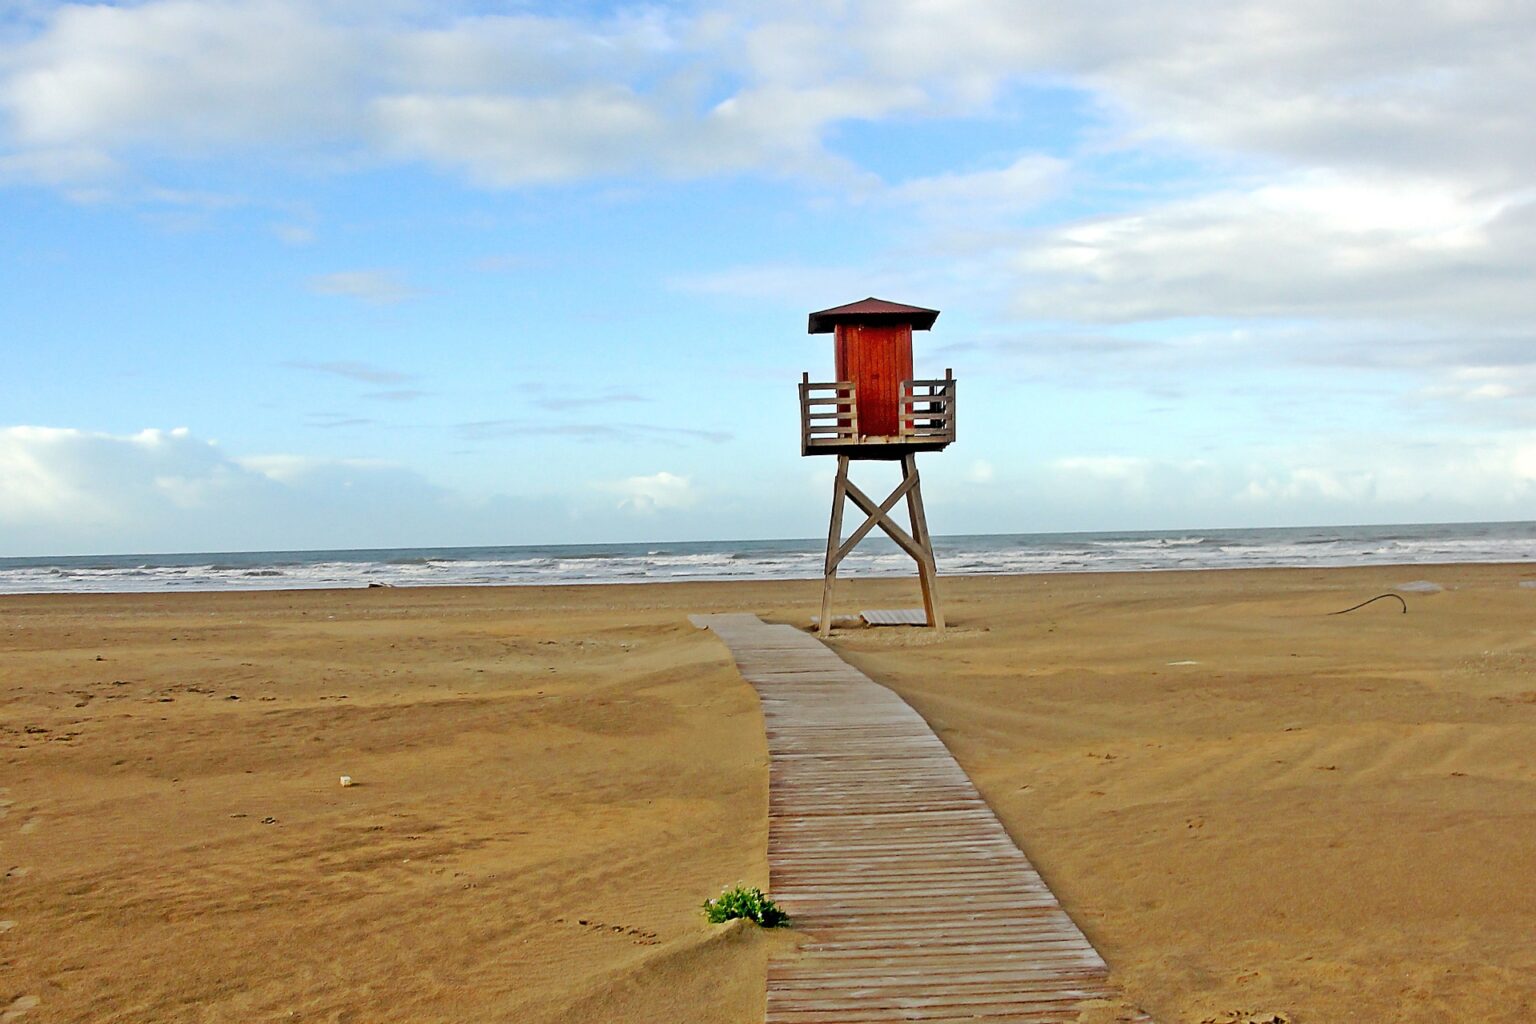 Playas de Huelva